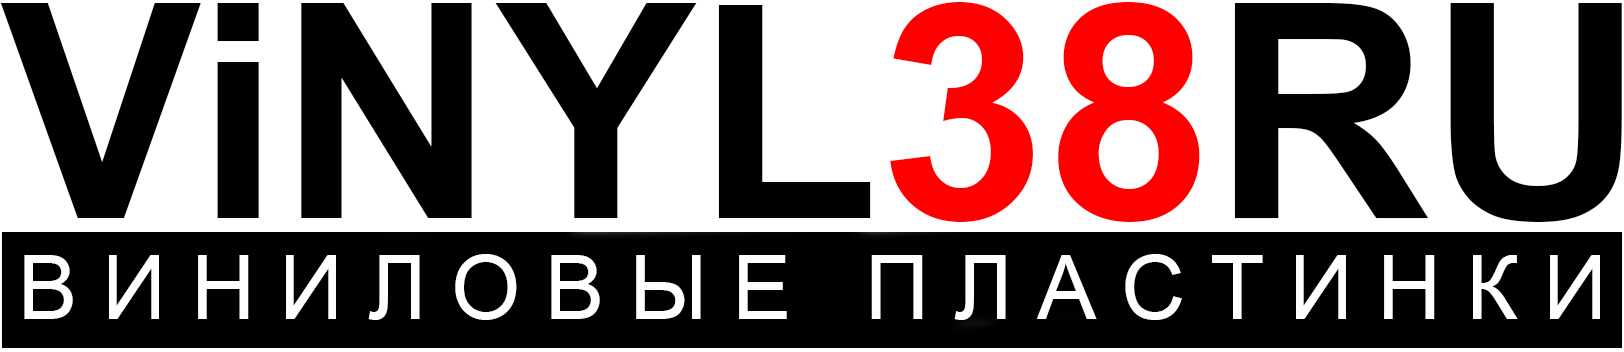 Vinyl38.ru Виниловые пластинки Иркутск